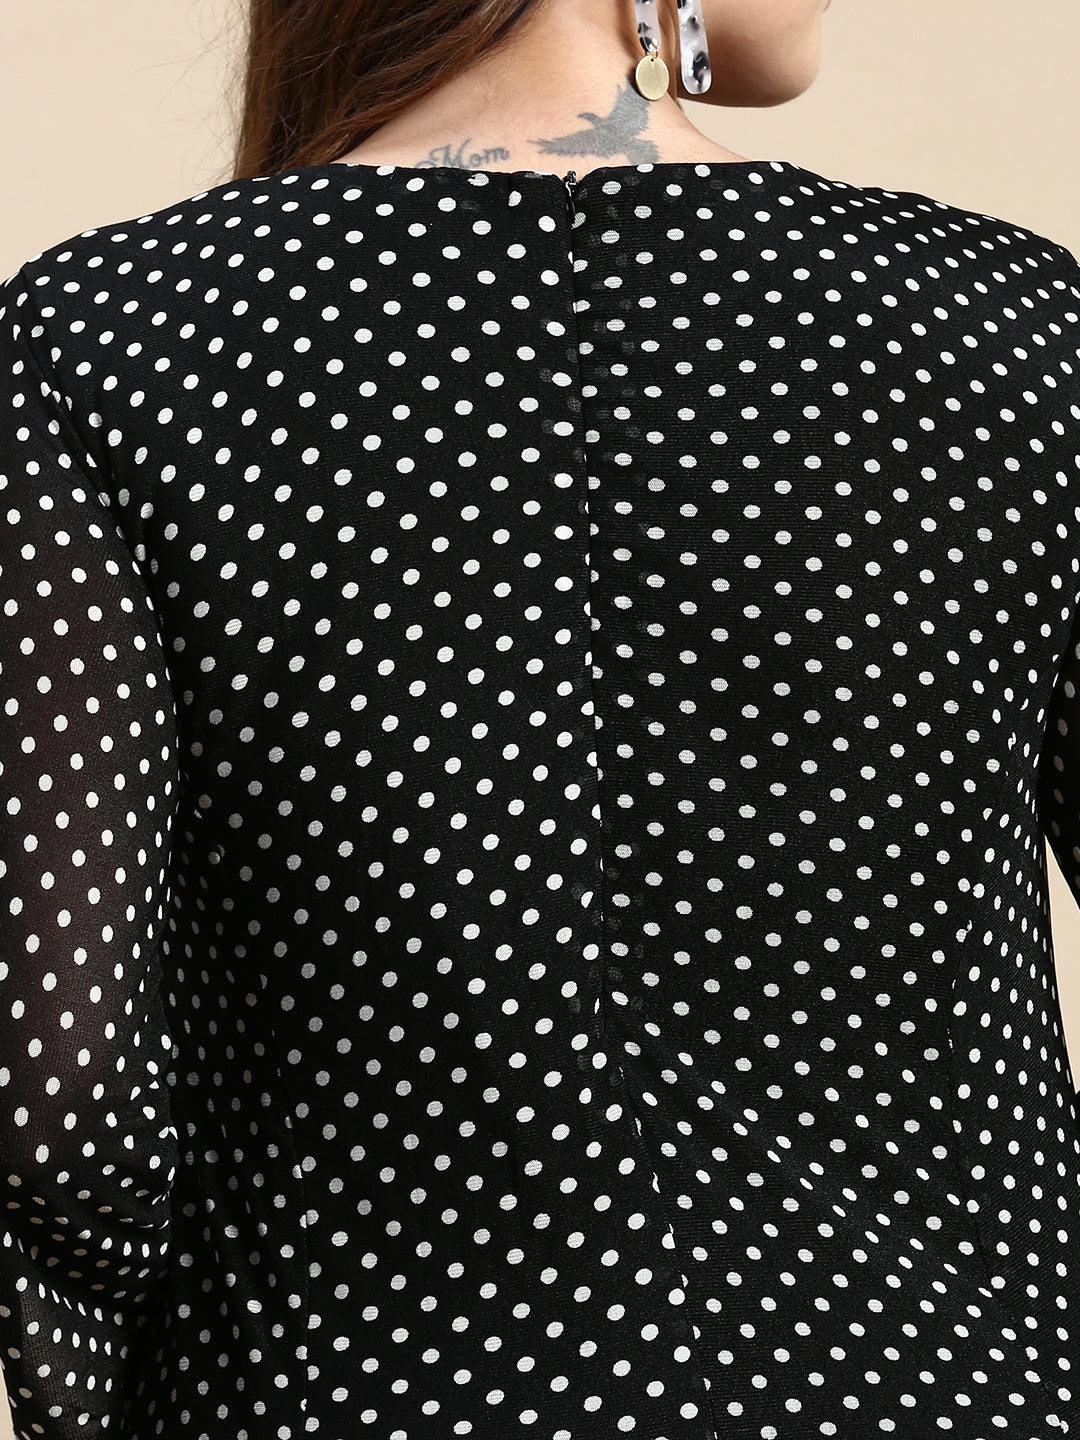 Women Black Polka Dots A-Line Dress